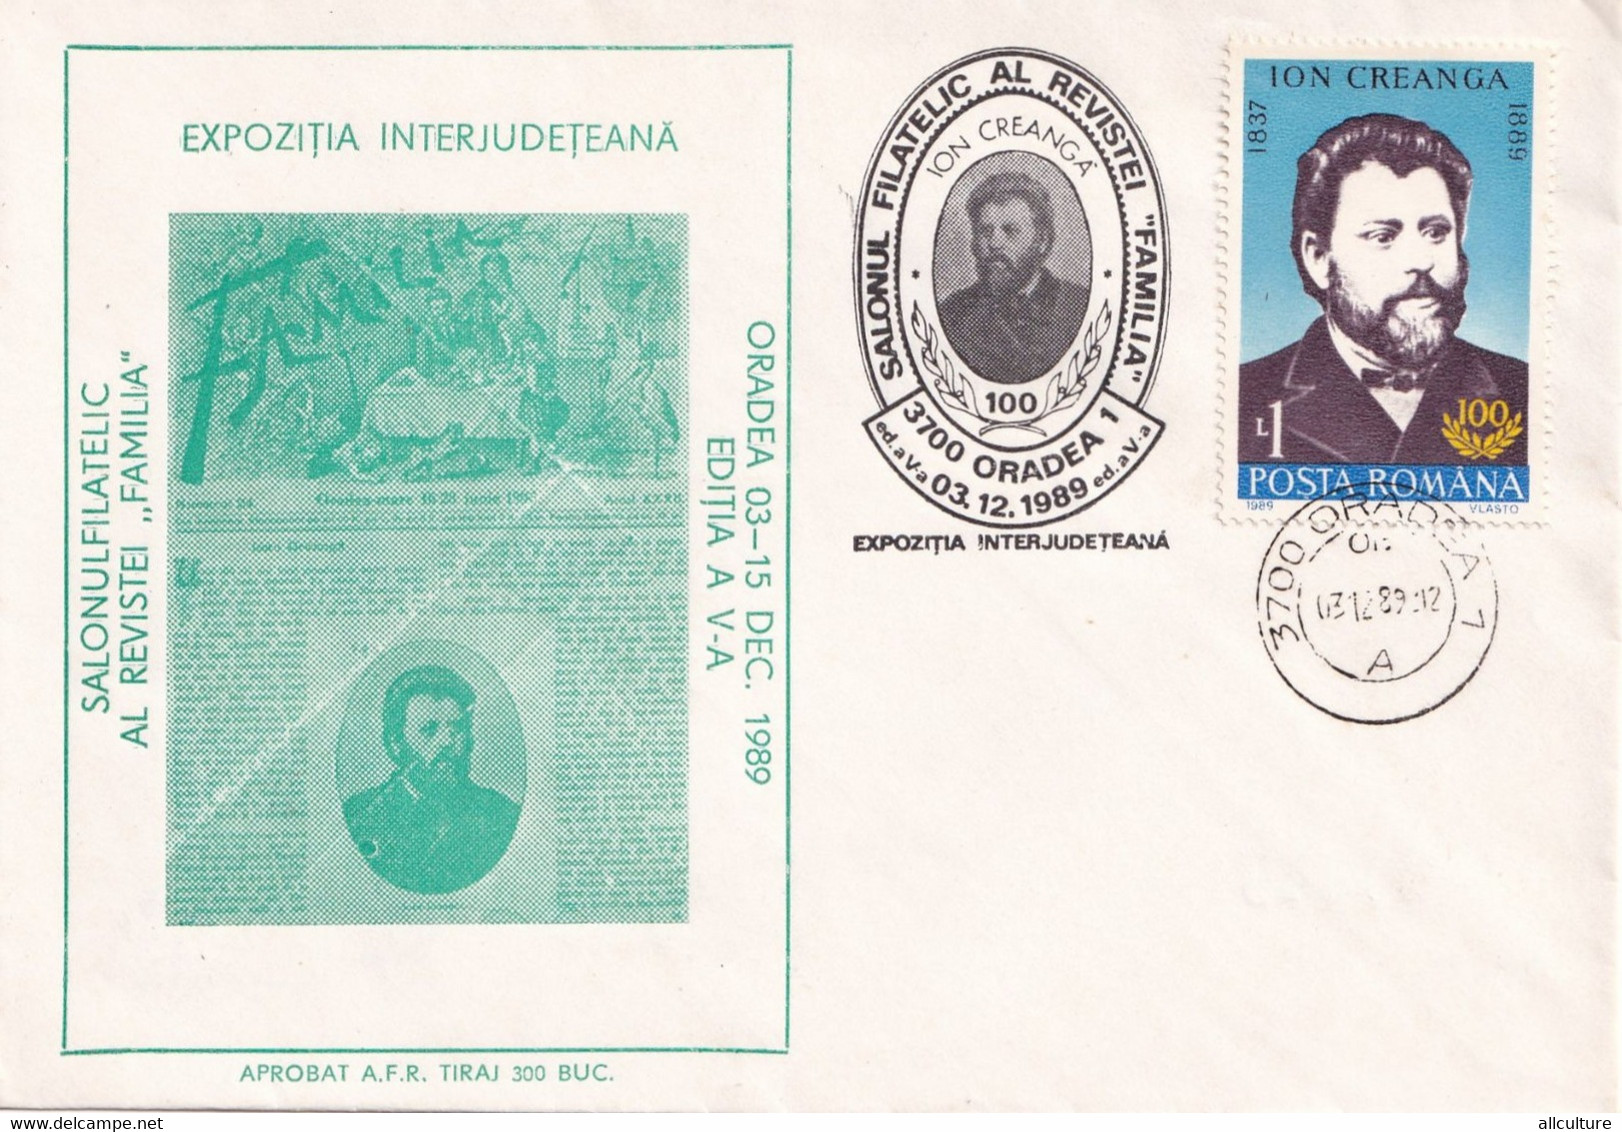 A3017 - Ion Creanga, Scriitor Roman, Expozitia Interjudeteana Oradea 1989 Republica Socialista Romania Posta Romana - Lettres & Documents